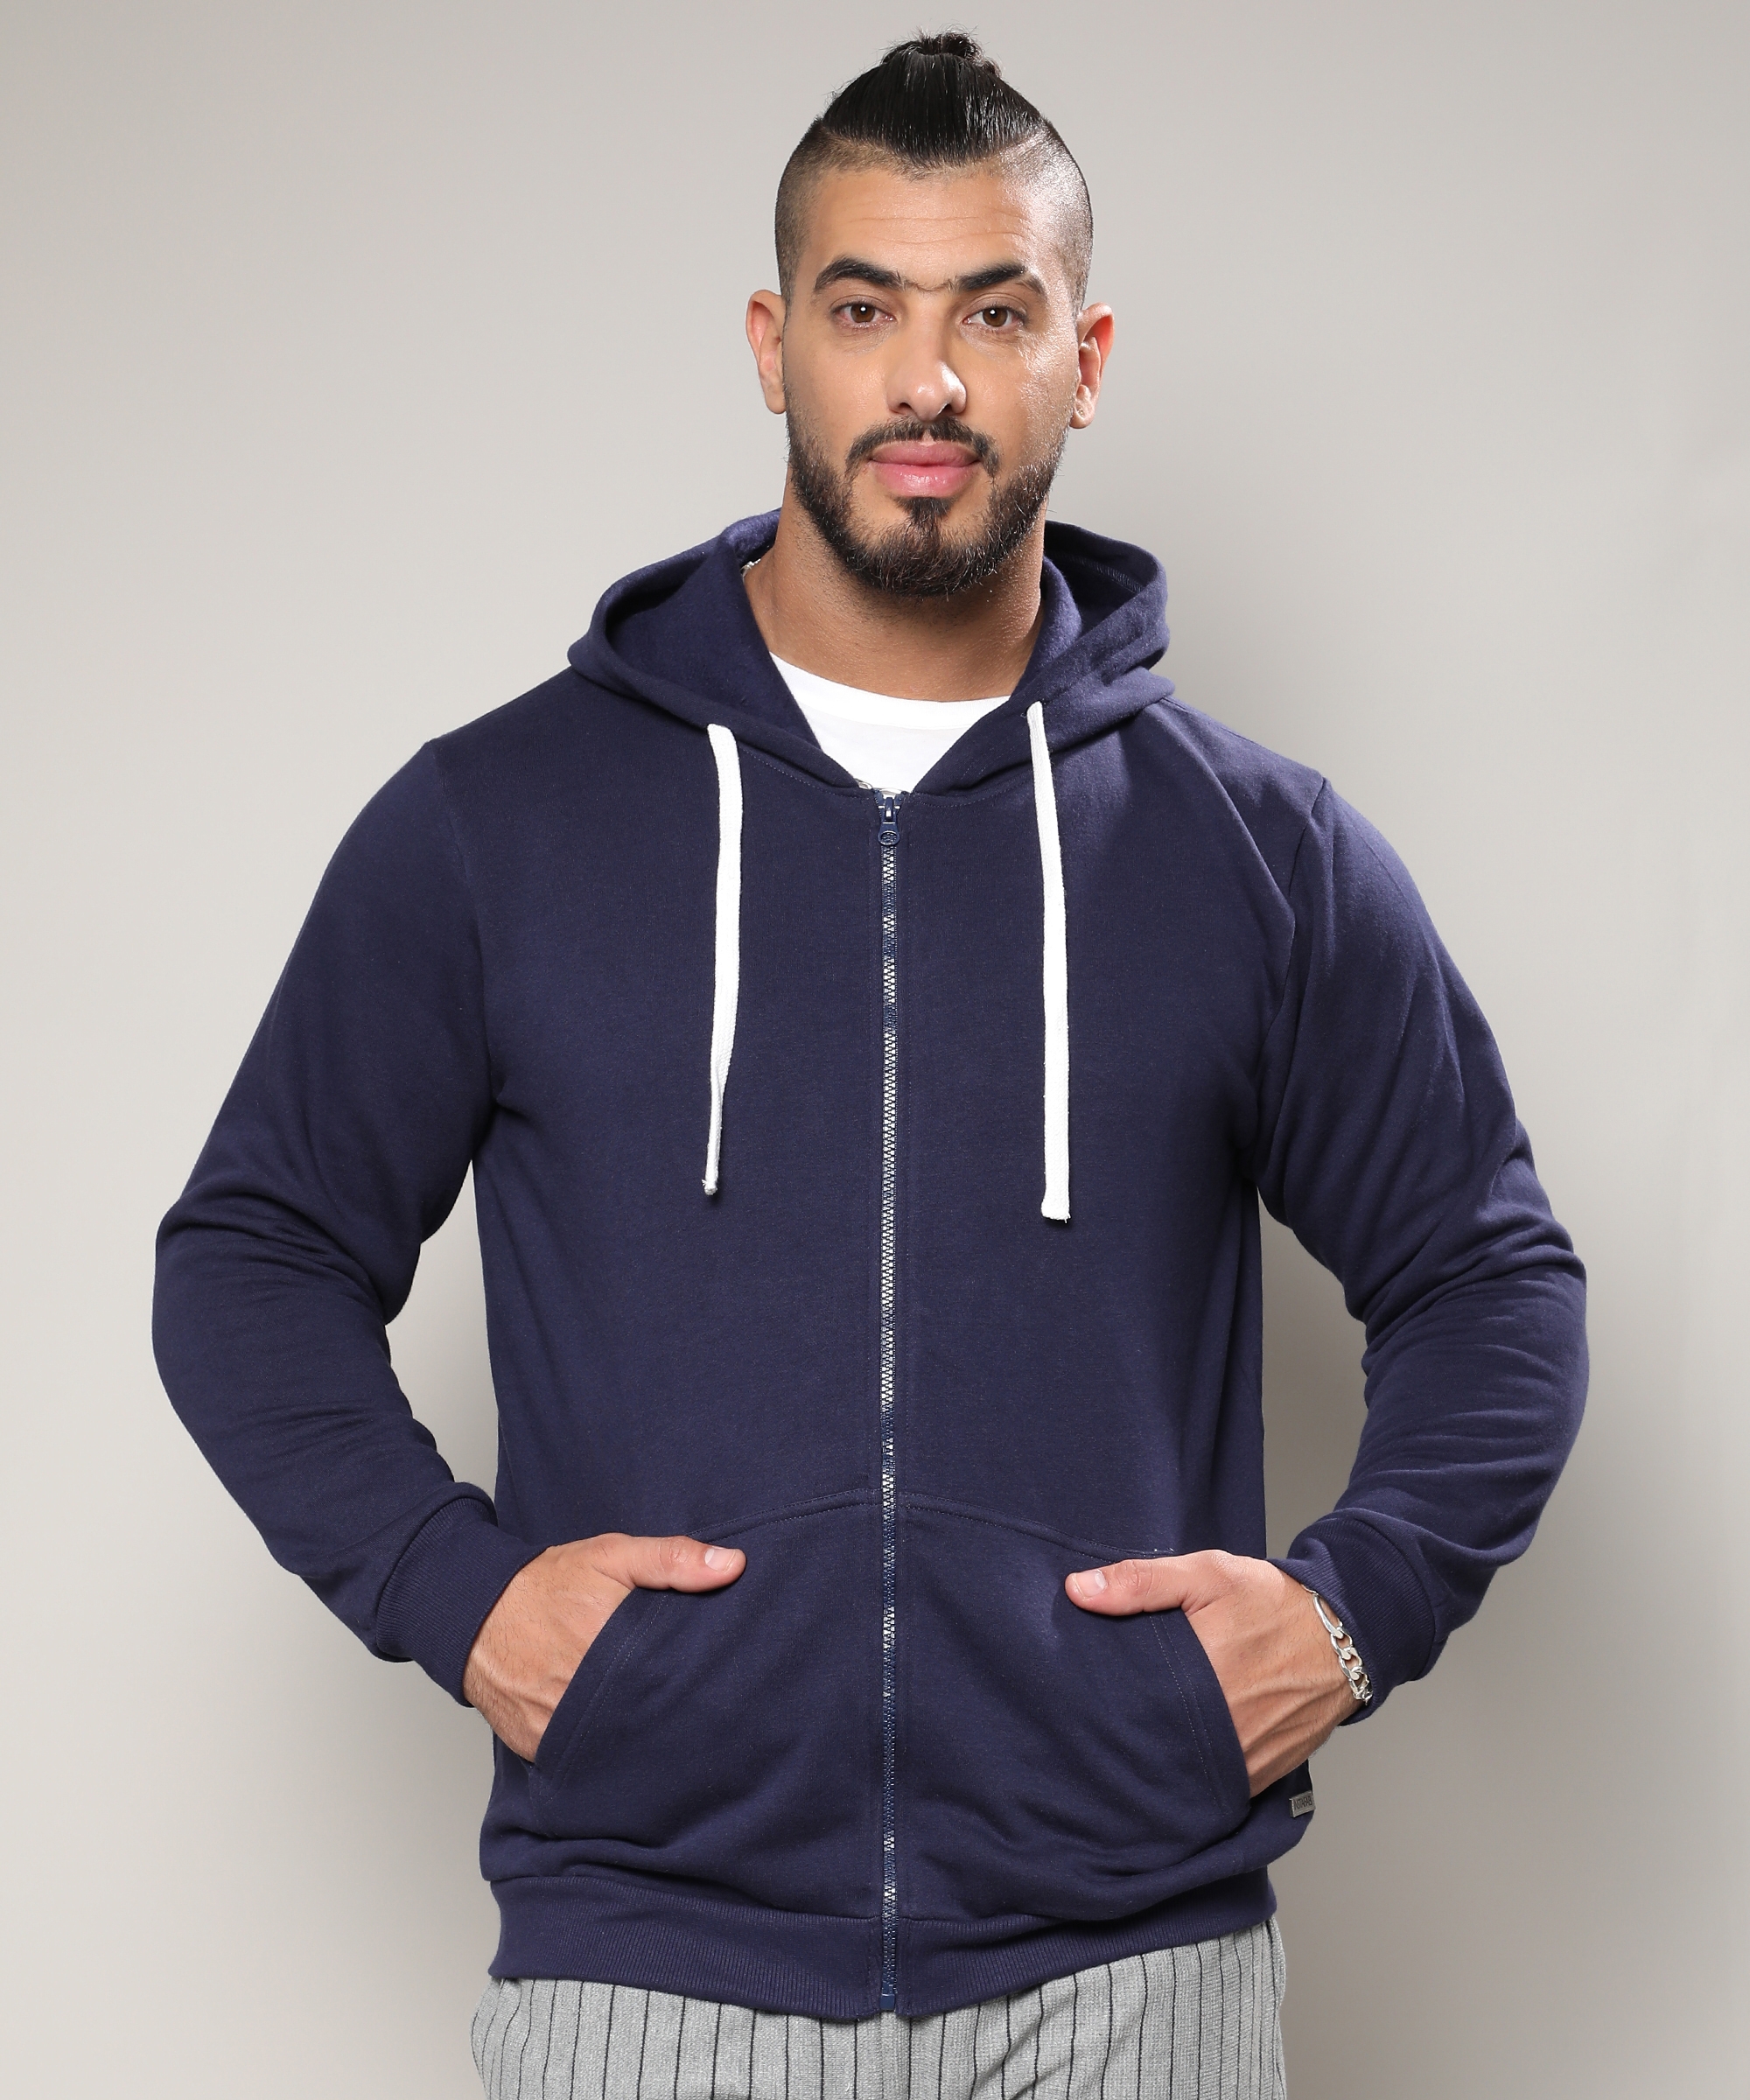 Men's Navy Blue Zip-Front Hoodie With Contrast Drawstring